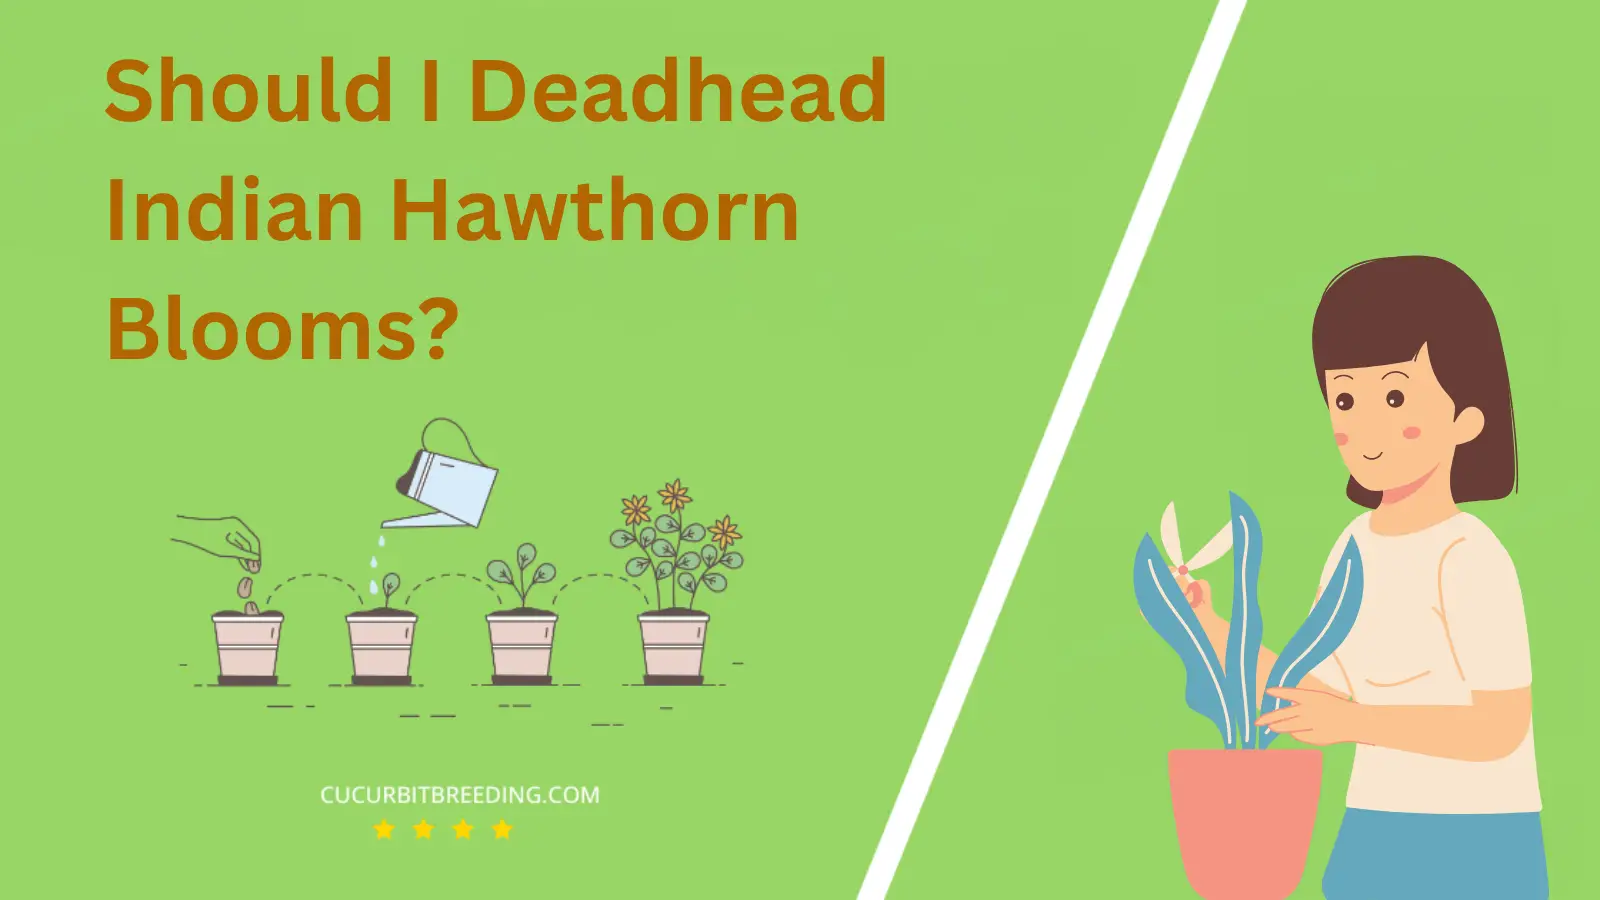 Should I Deadhead Indian Hawthorn Blooms?